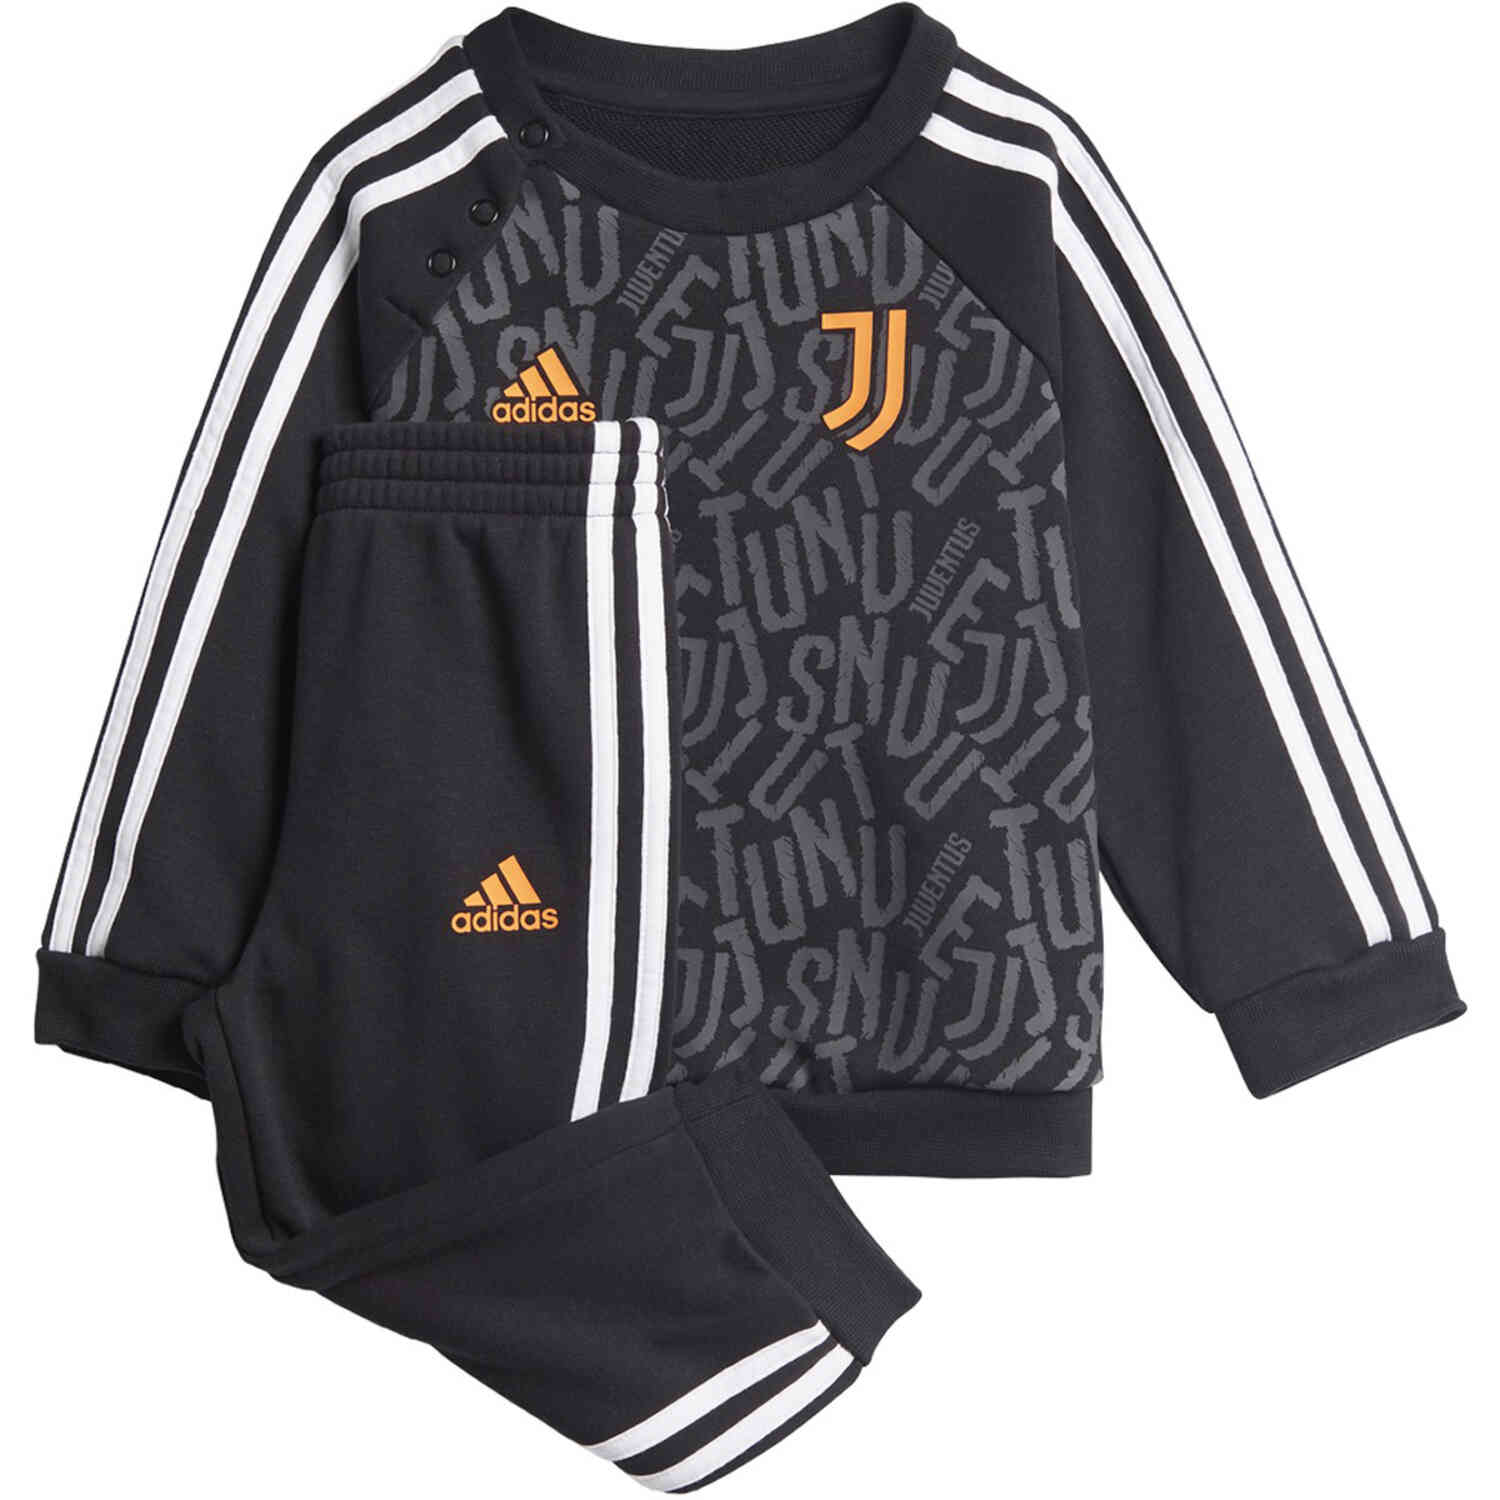 Infants adidas Juventus 3-Stripes Jogger Black/White/App Signal Orange - SoccerPro